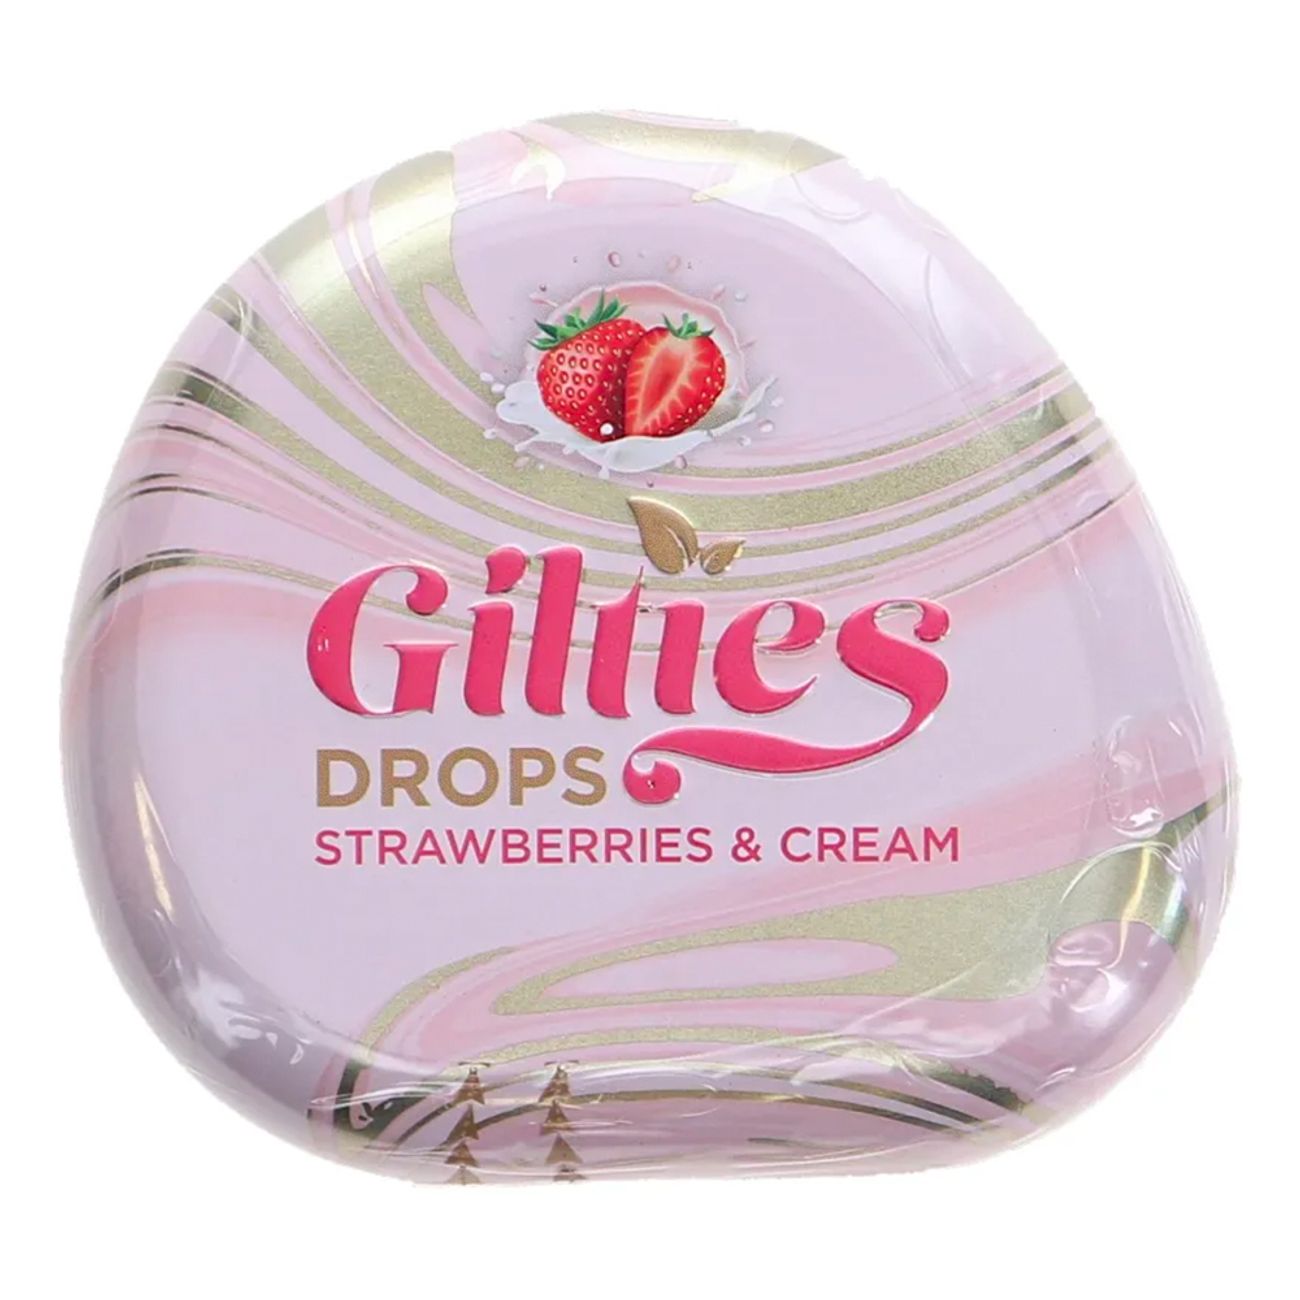 gilties-drops-strawberries-cream-86583-1